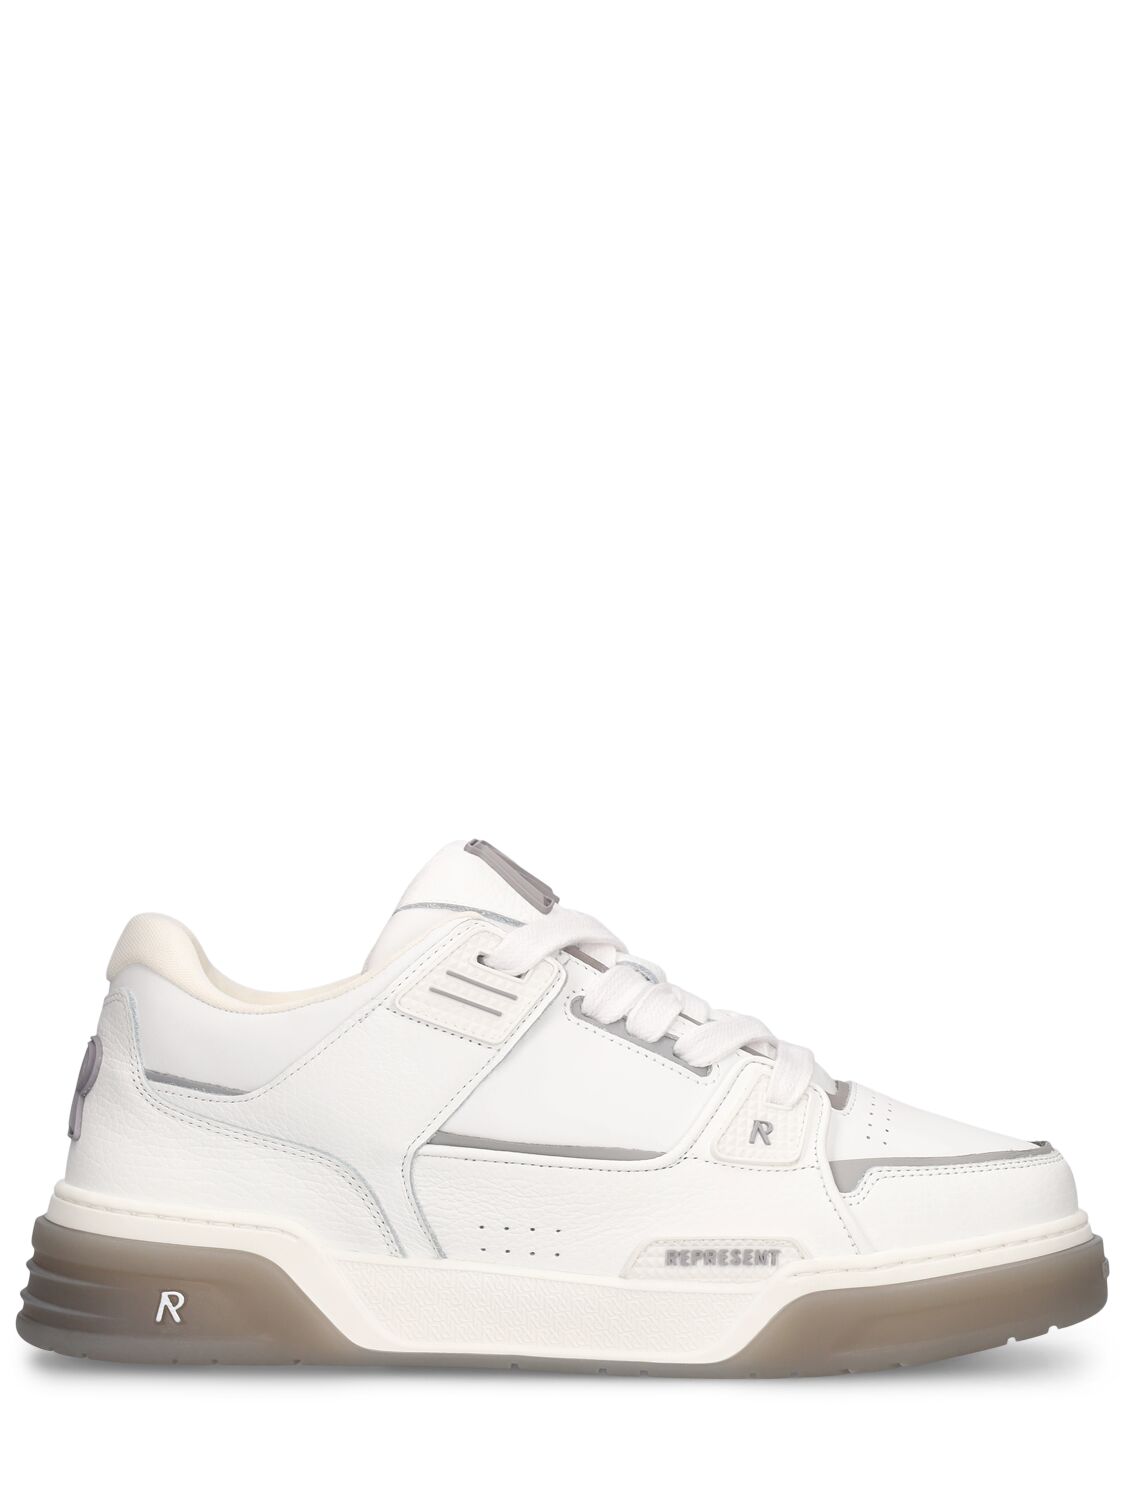 Shop Represent Studio Sneaker In White,grey